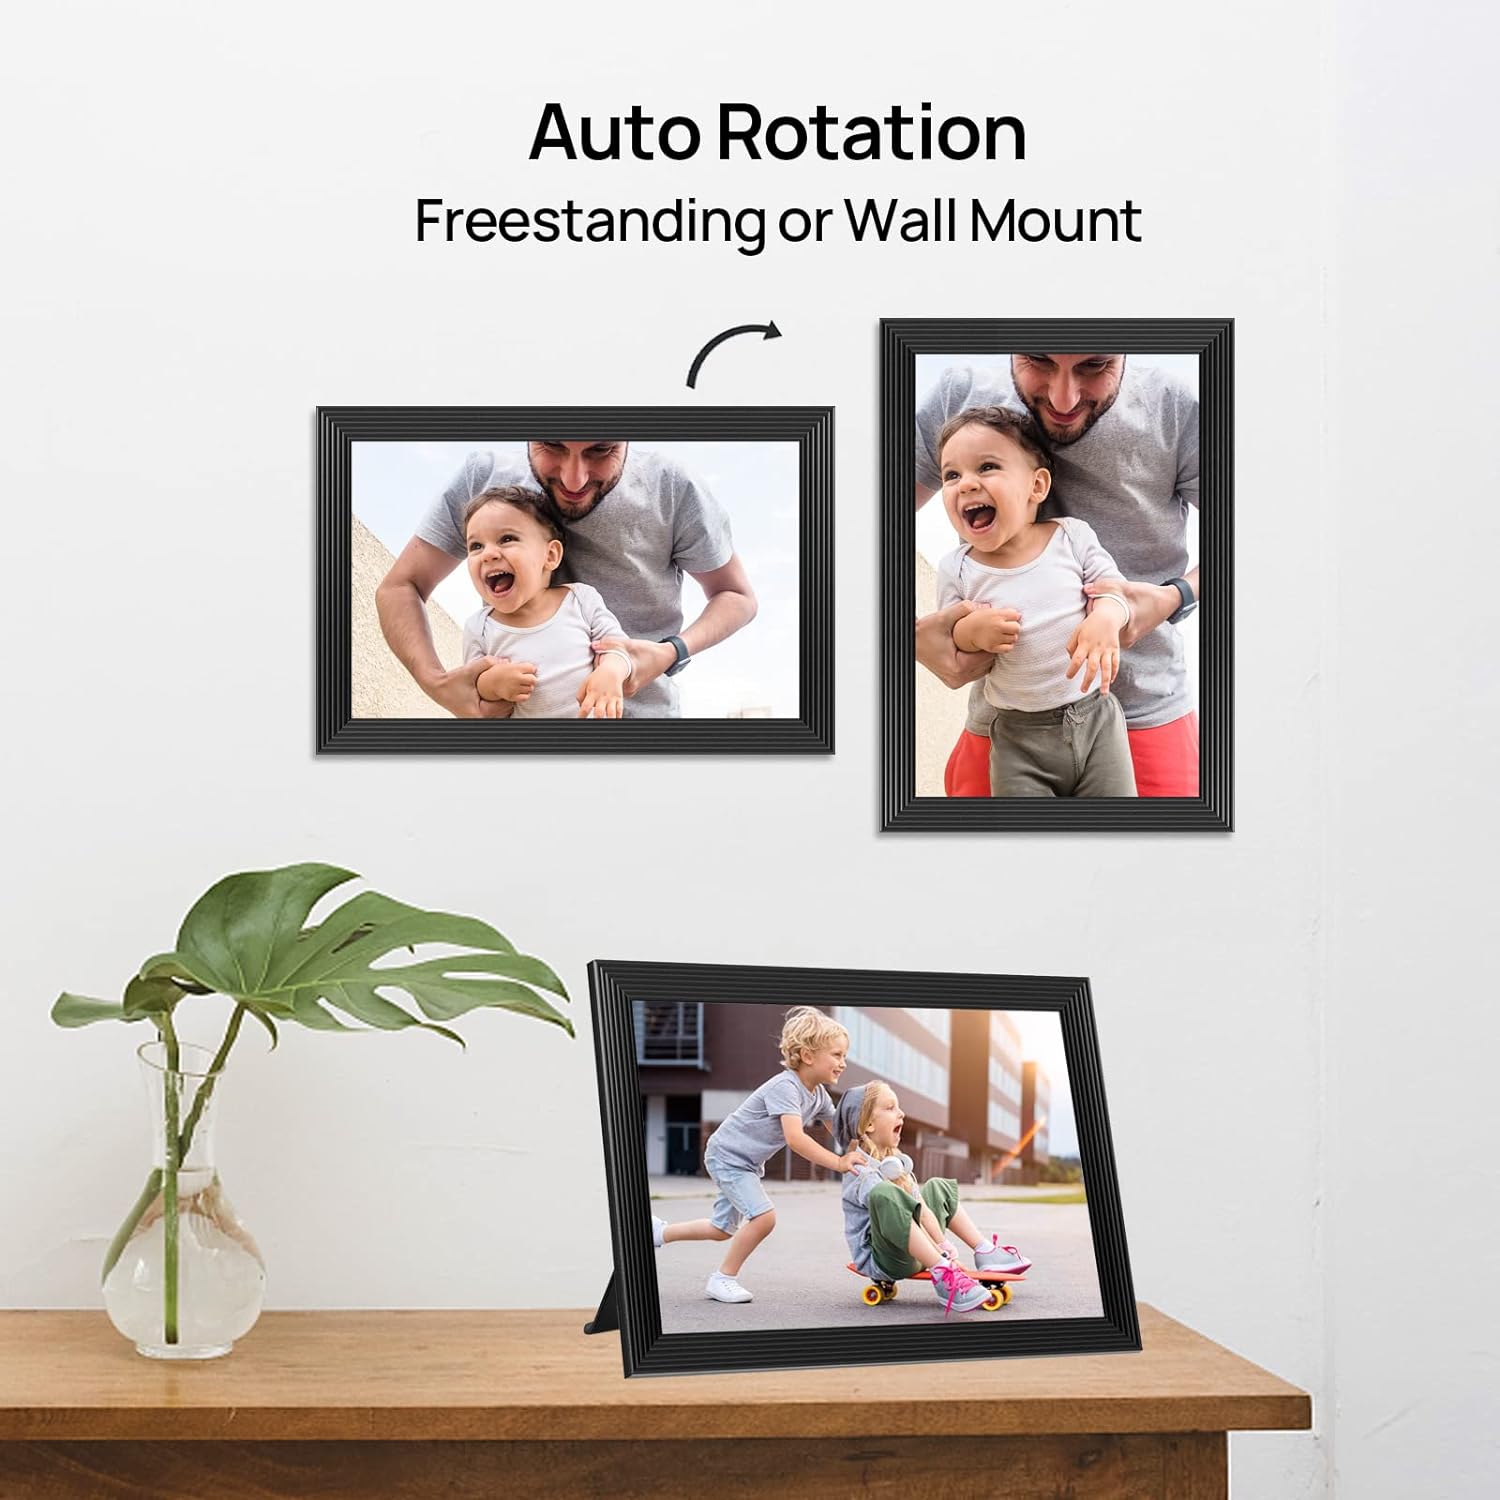 auto rotation feature of the black digital photo frame